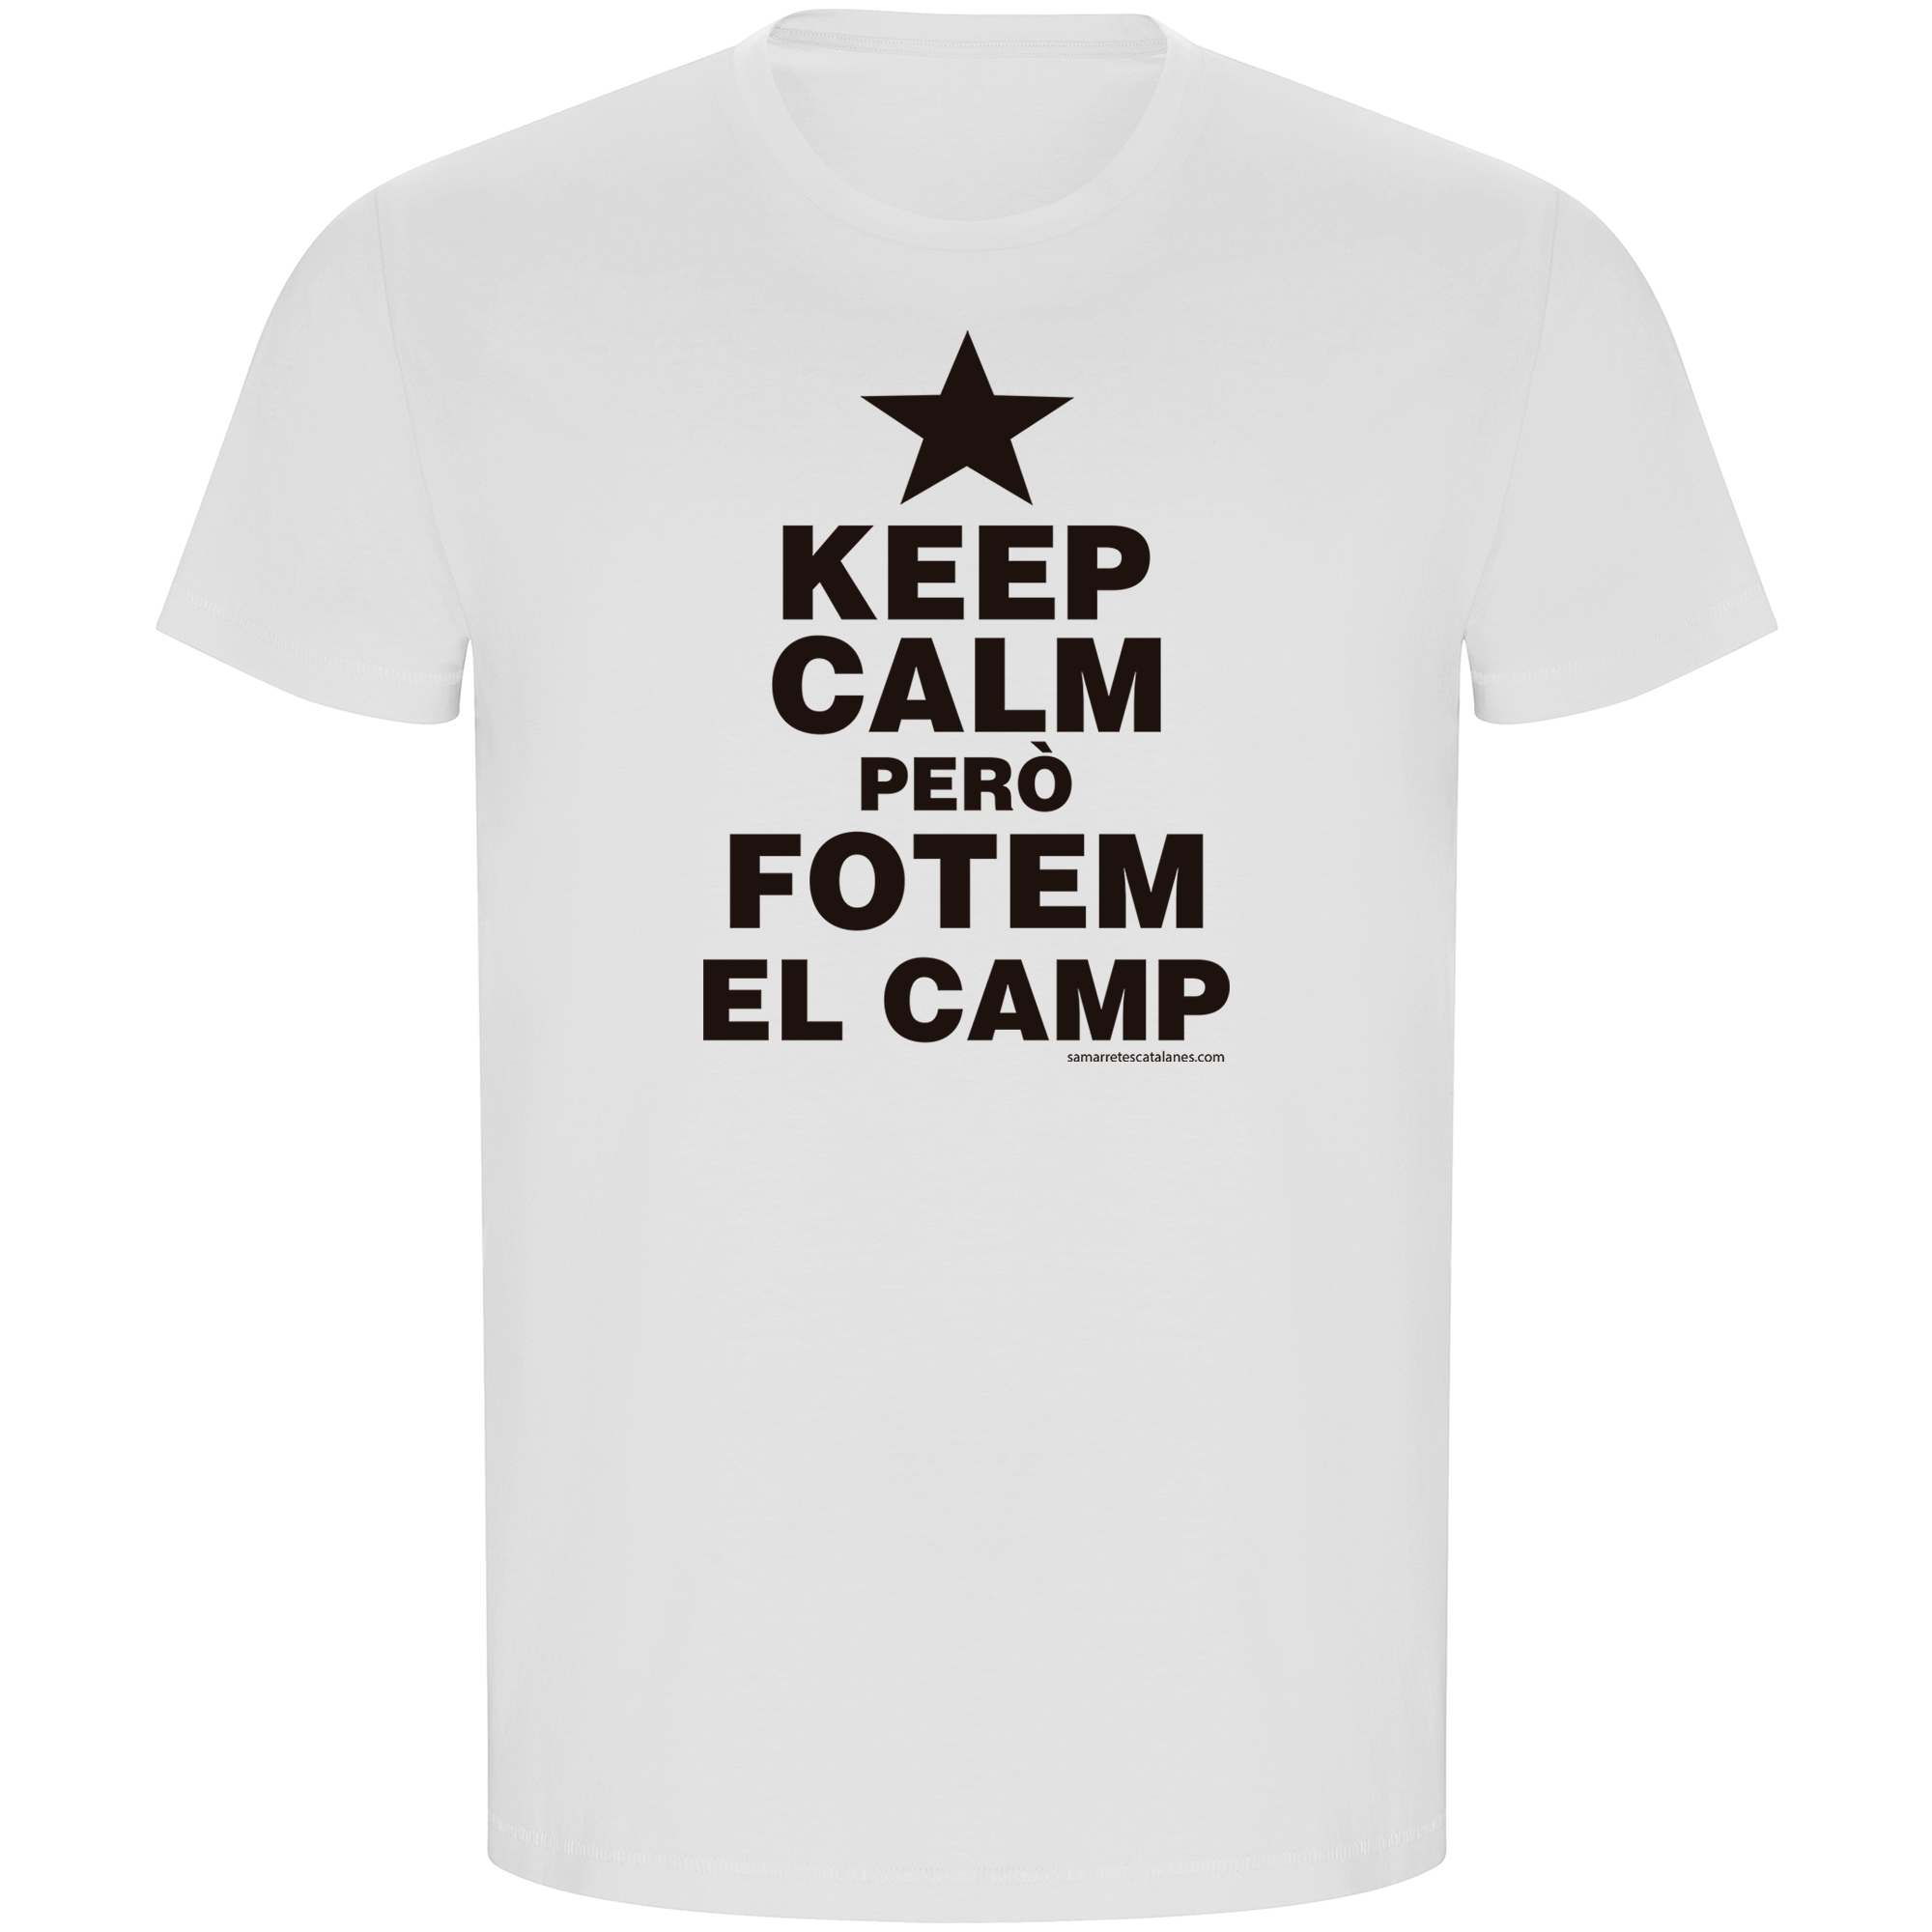 T Shirt ECO Catalonia Keep Calm pero fotem el Camp Short Sleeves Man